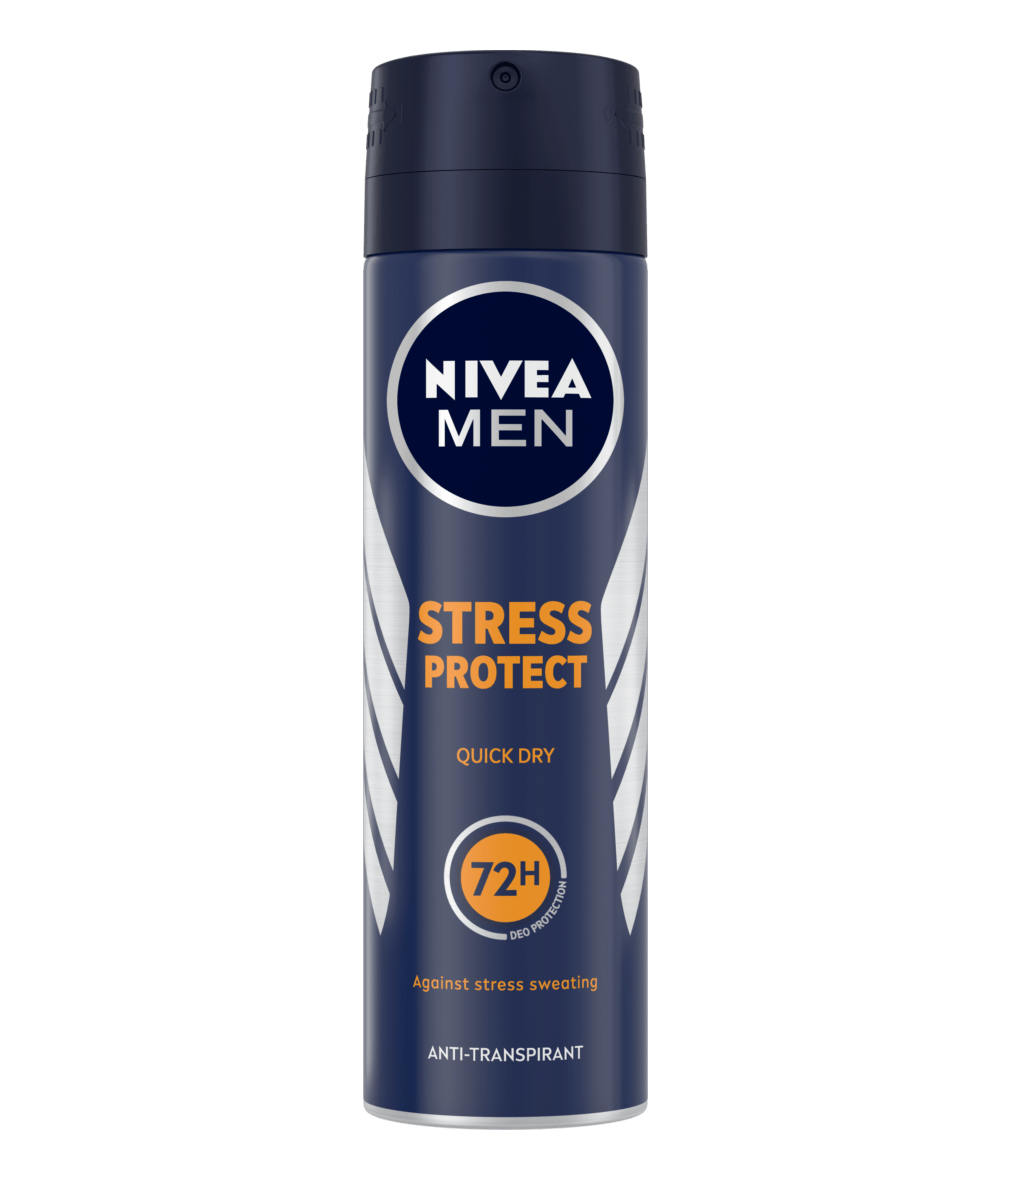 naar voren gebracht dagboek Reizen Stress Protect Anti-Transpirant – Sneldrogend – NIVEA MEN